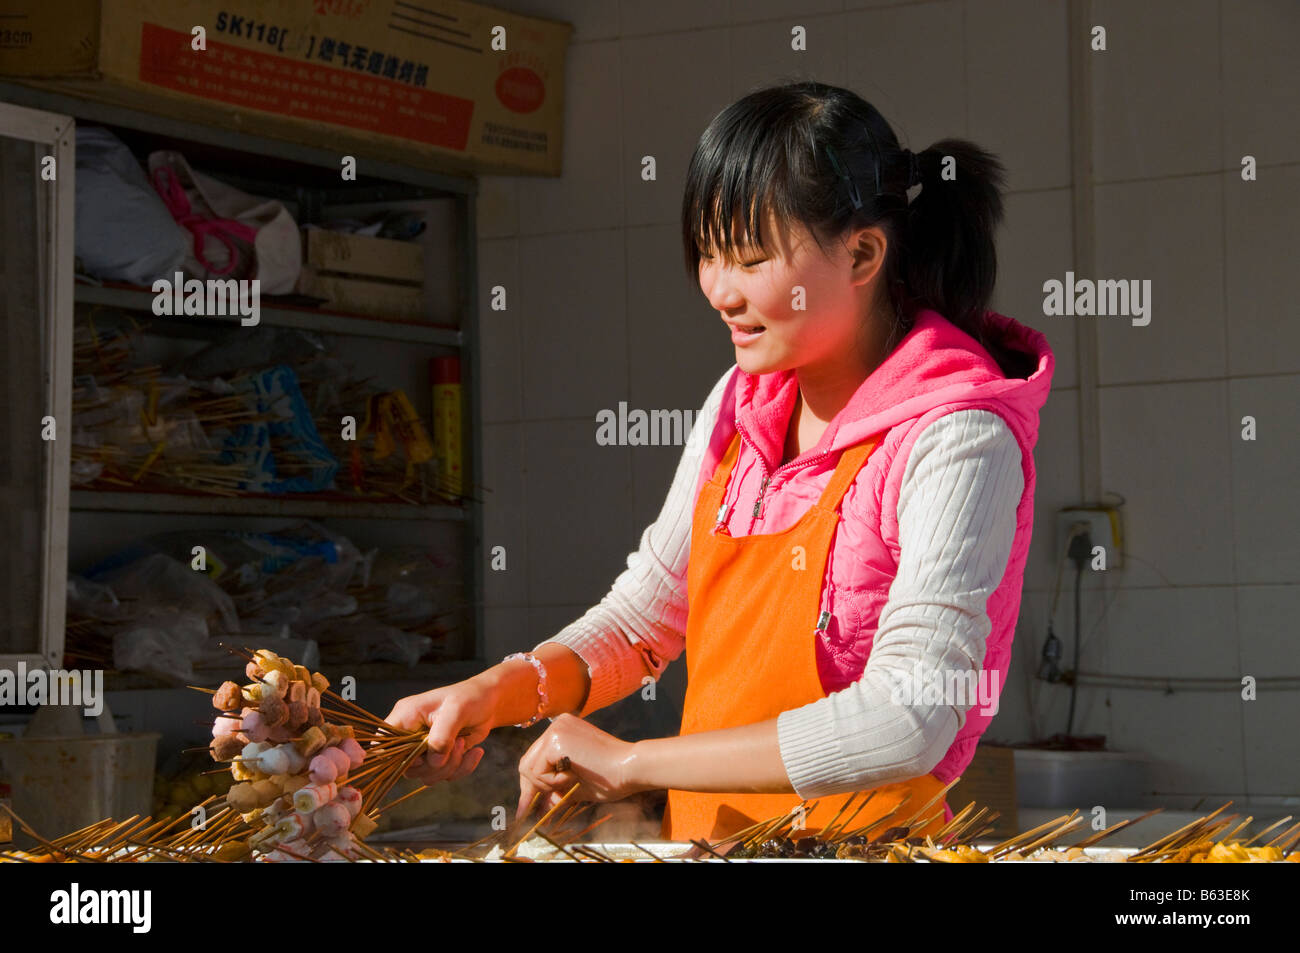 Food vendor Beijing China Stock Photo